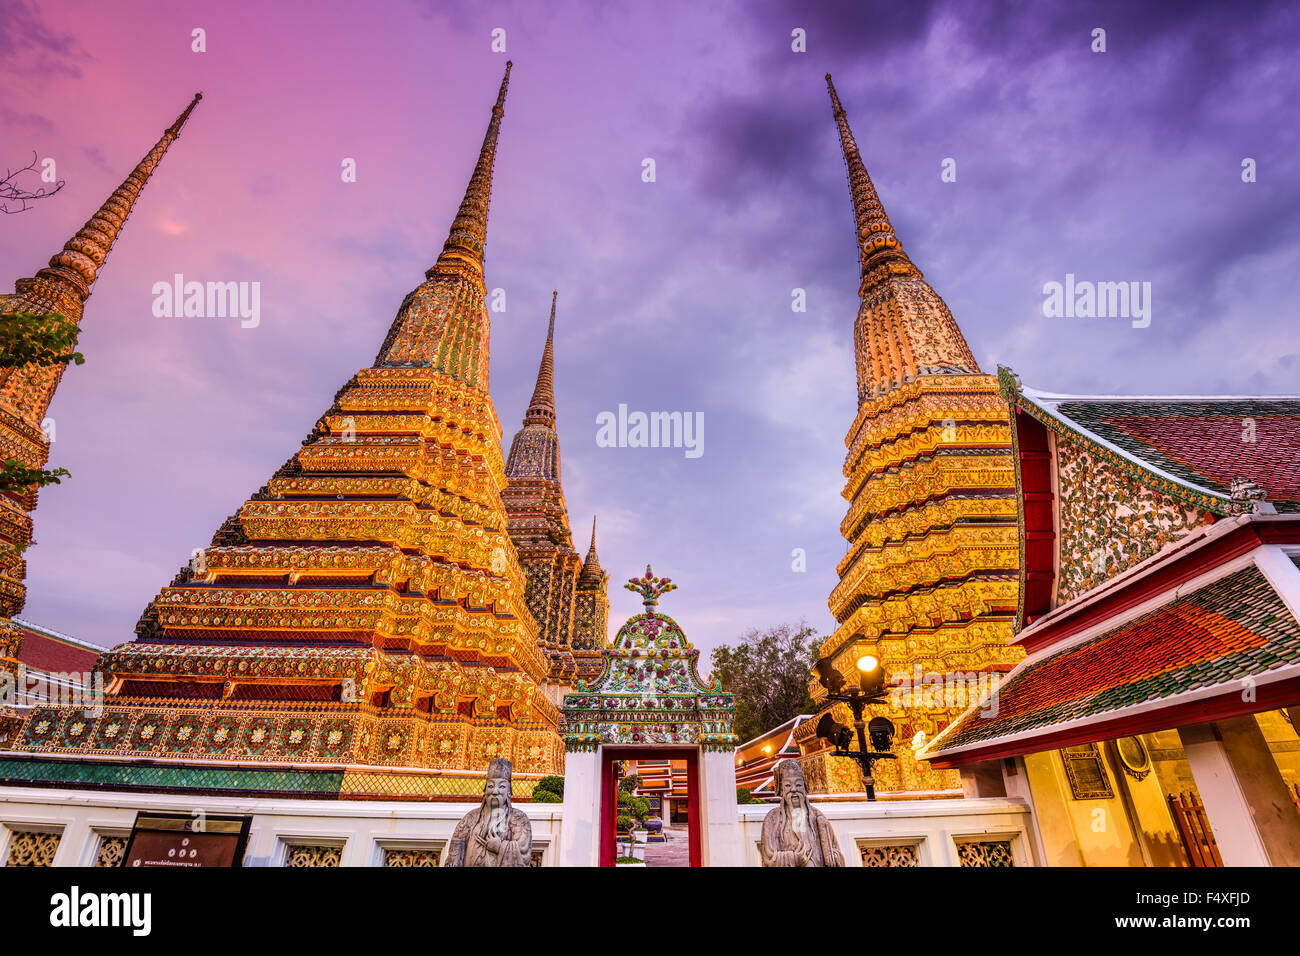 Temple de Wat Pho à Bangkok, Thaïlande. Banque D'Images